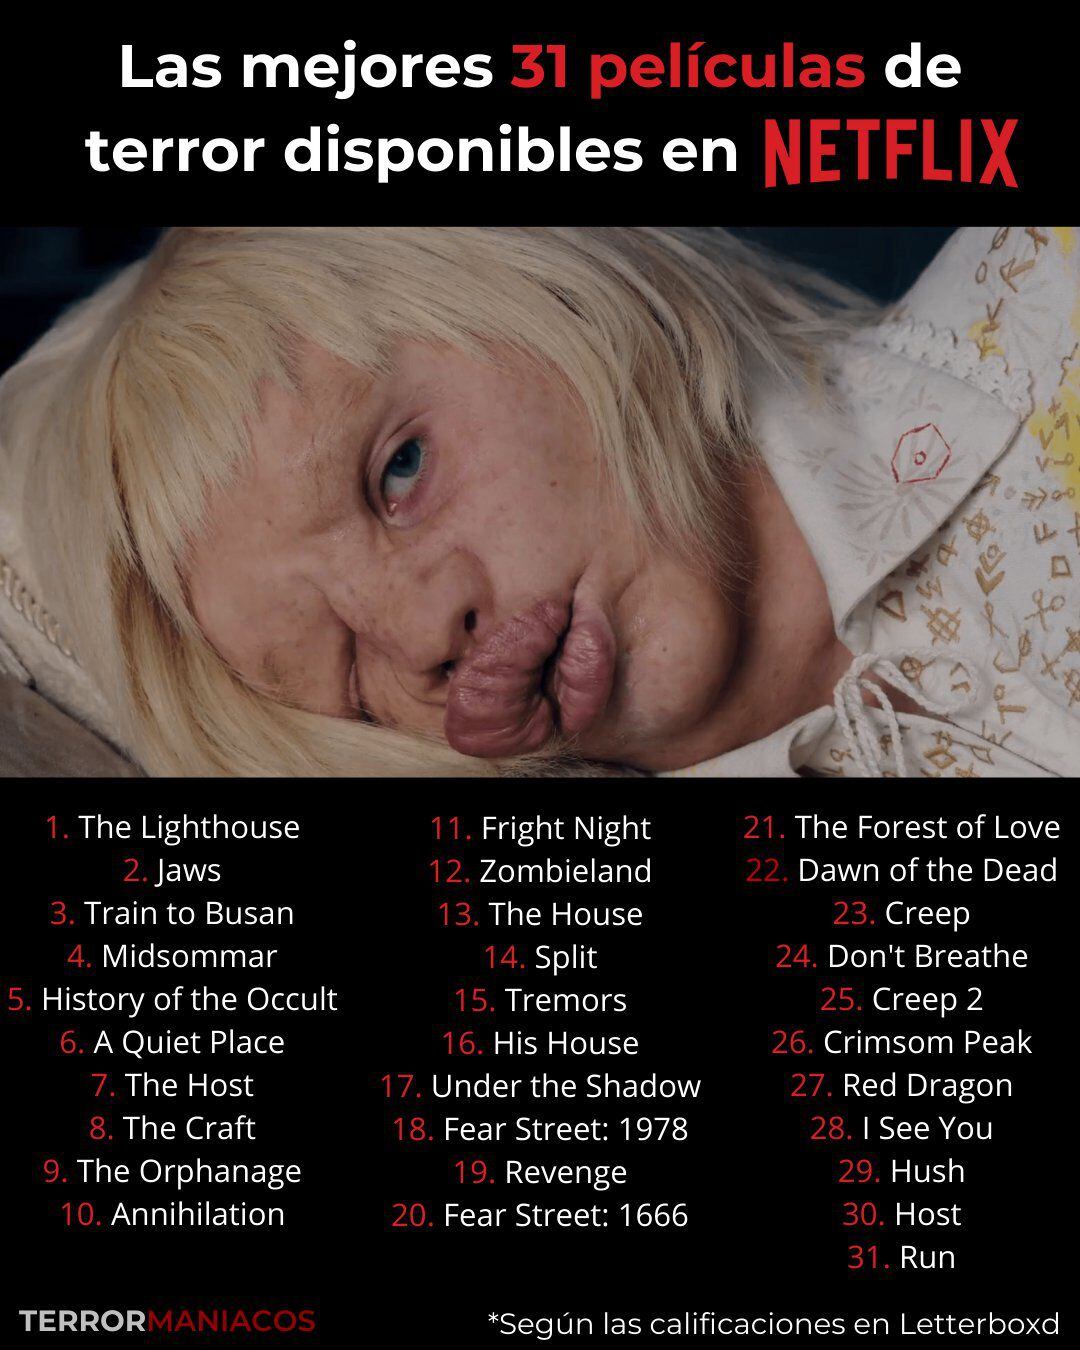 Midsommar está disponible en Netflix. (Foto: Twitter @Terrormaniacos)